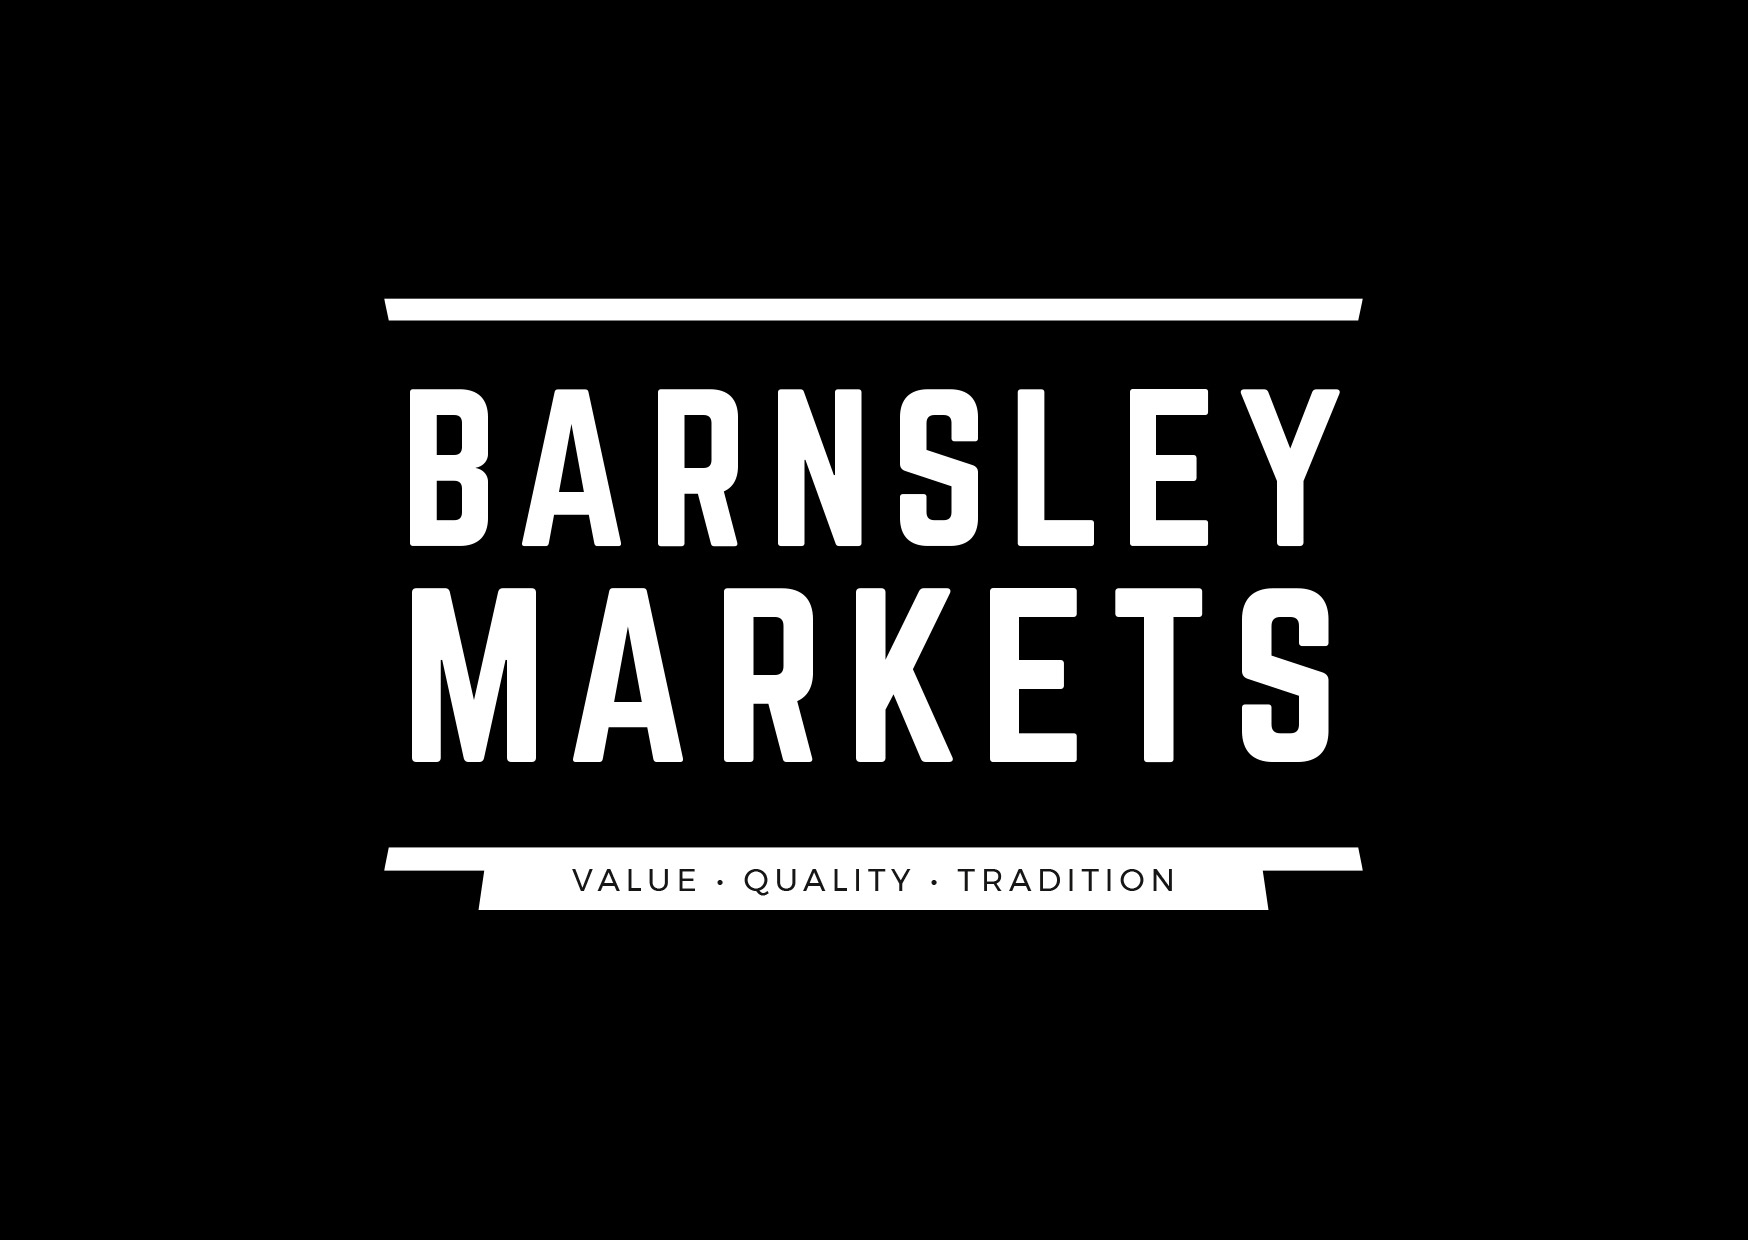 Barnsley Markets logo